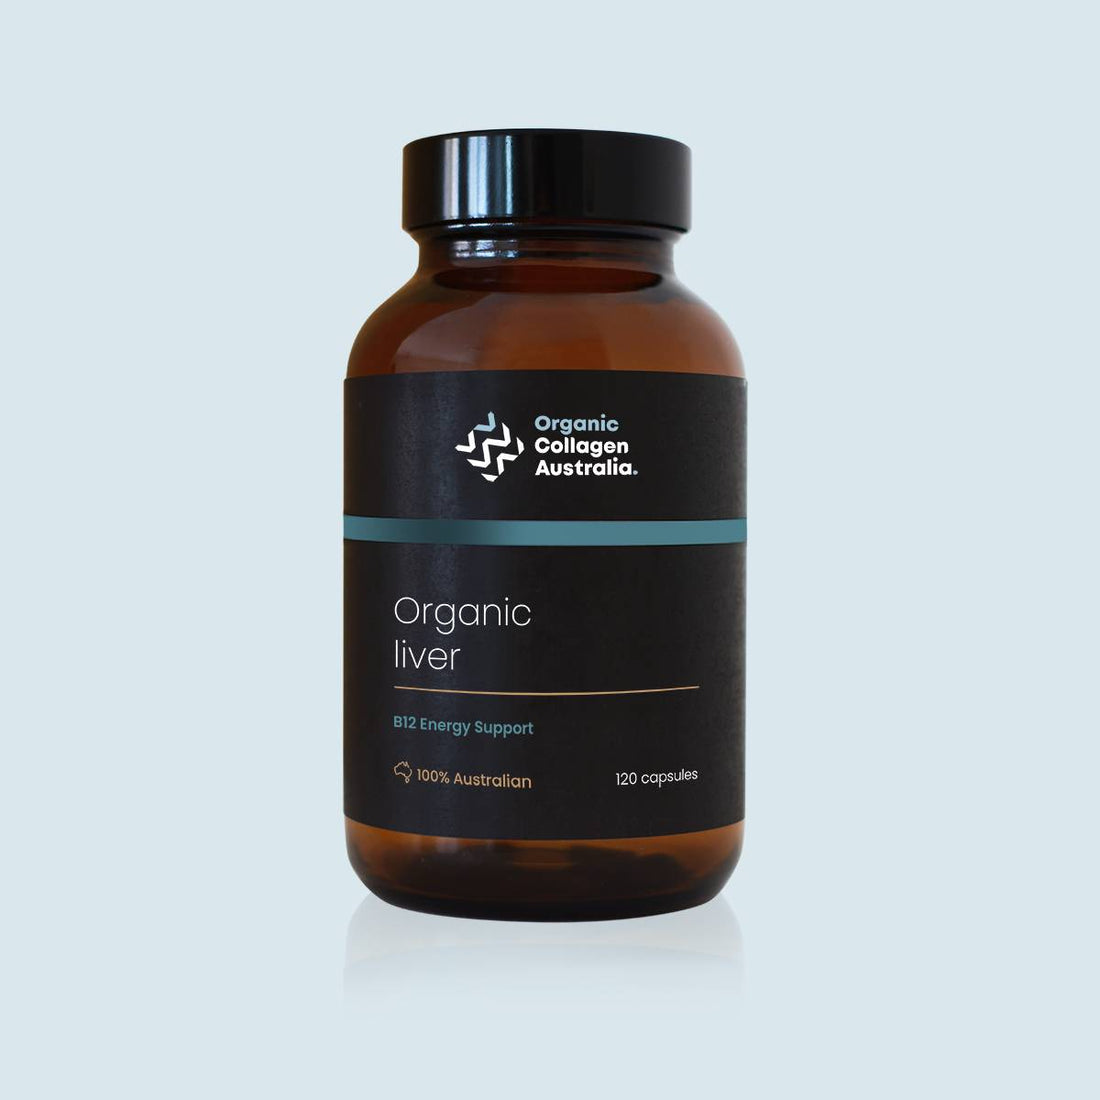 Organic Collagen Australia Organic Liver 120 Capsules (B12 Energy Support)